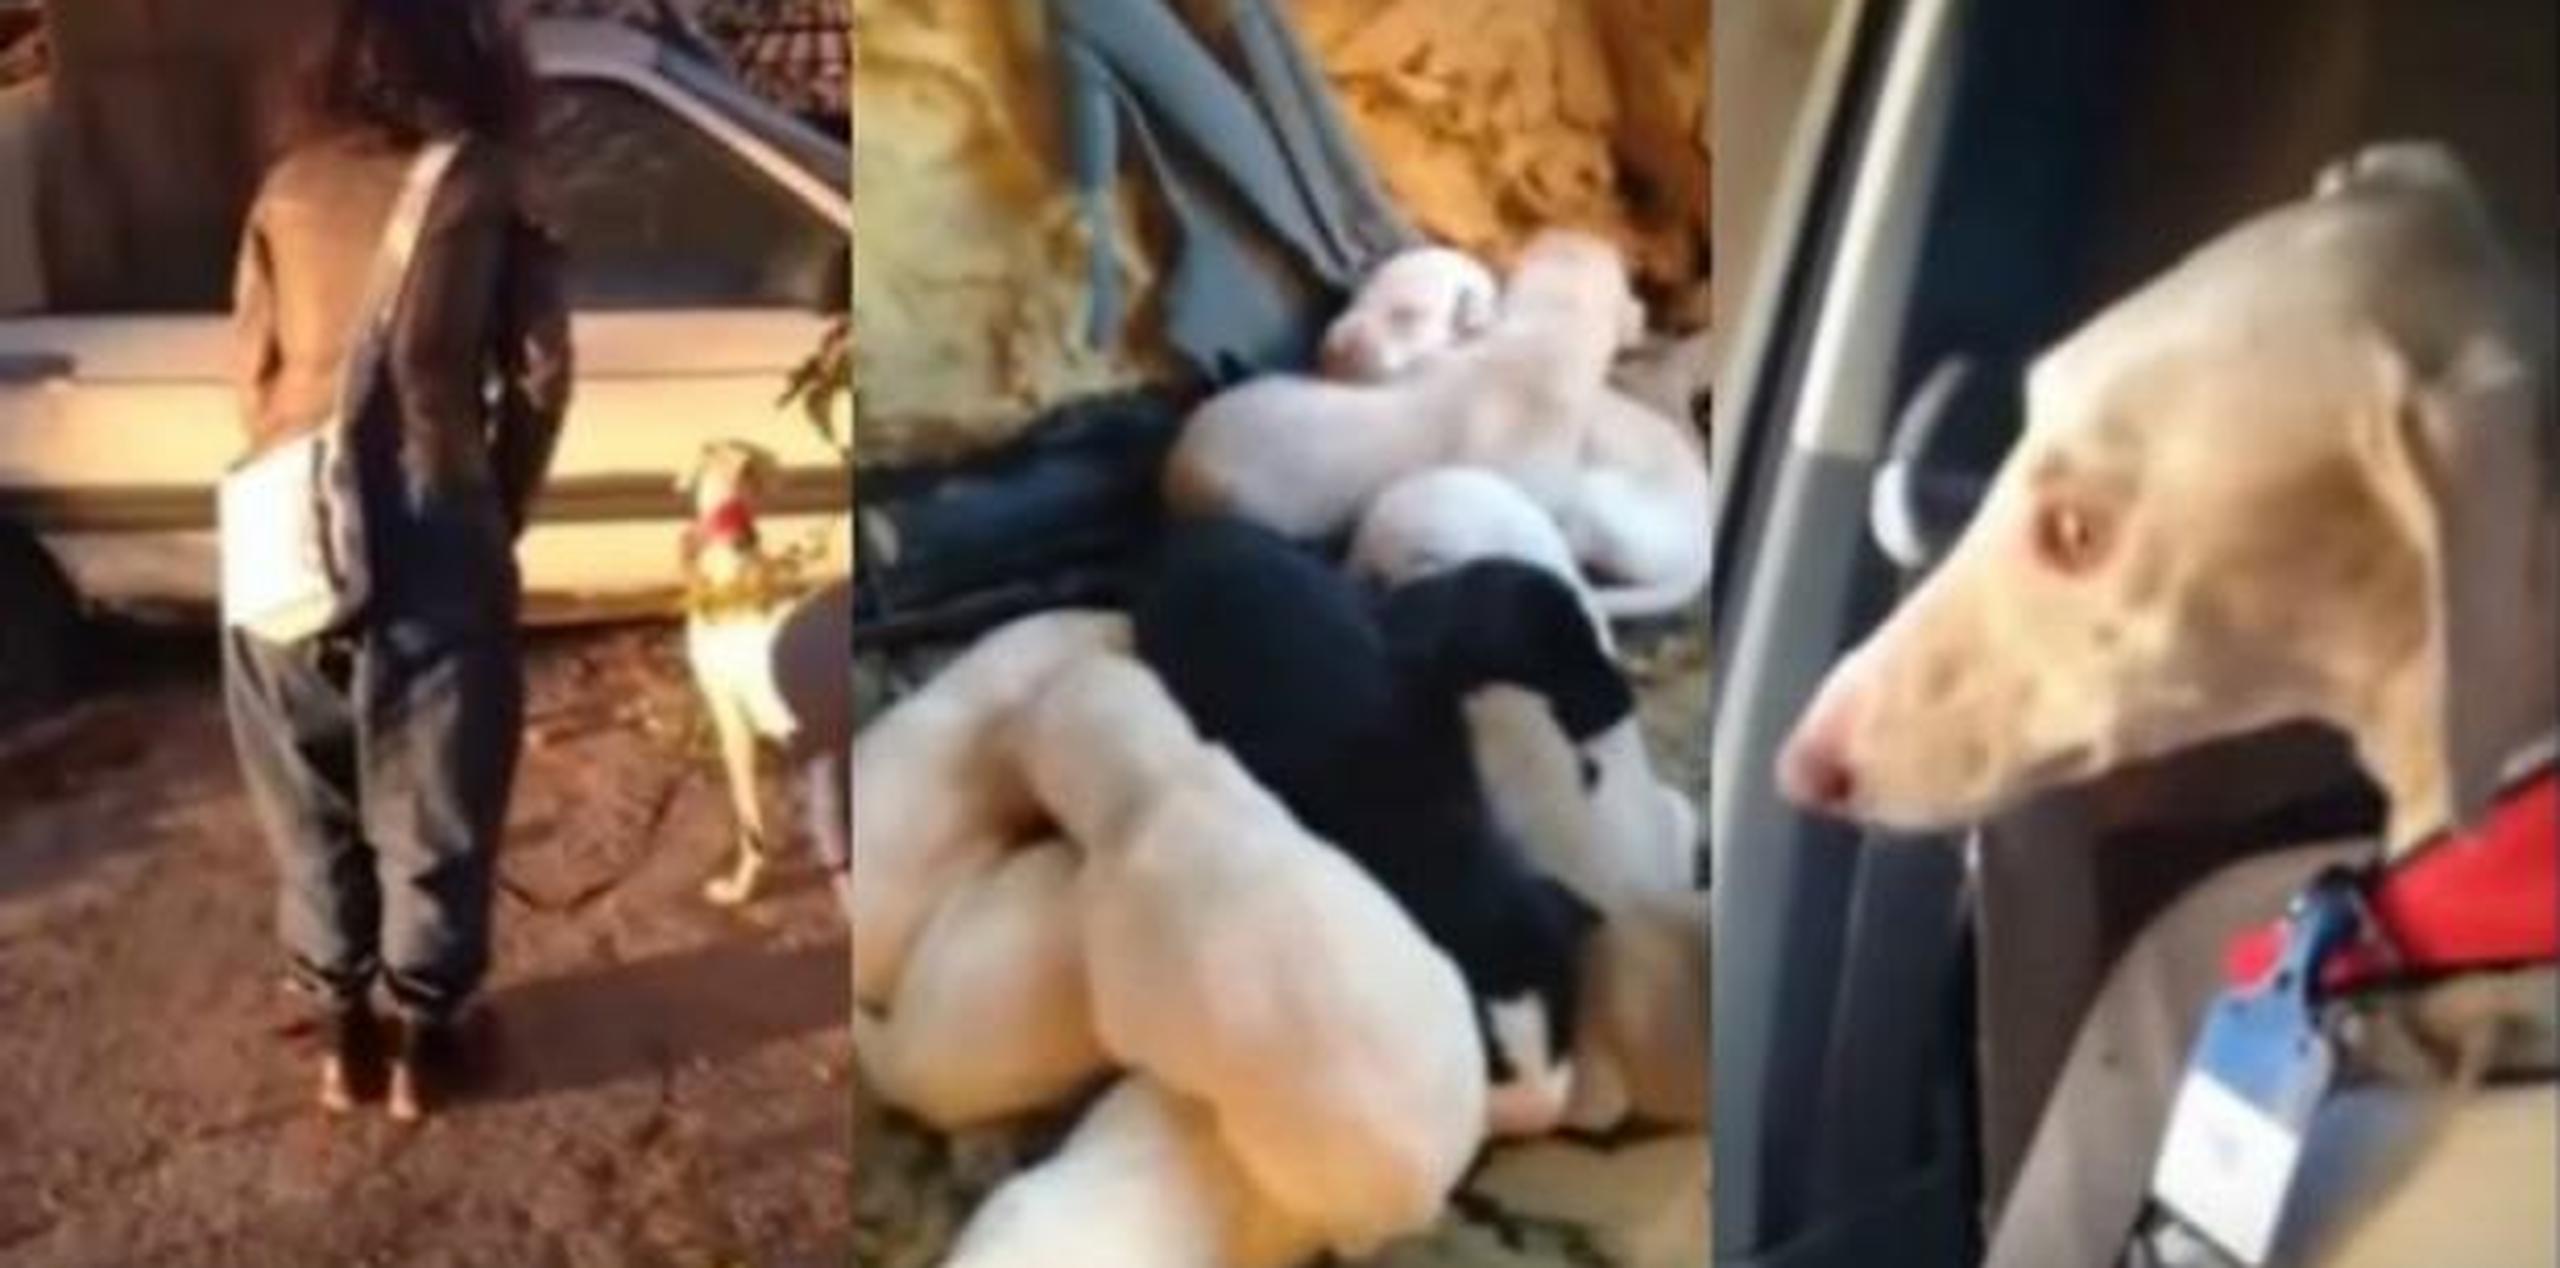 La perrita callejera, a pesar de su mal estado de salud, fue a proteger a sus cachorros. (Captura / YouTube)